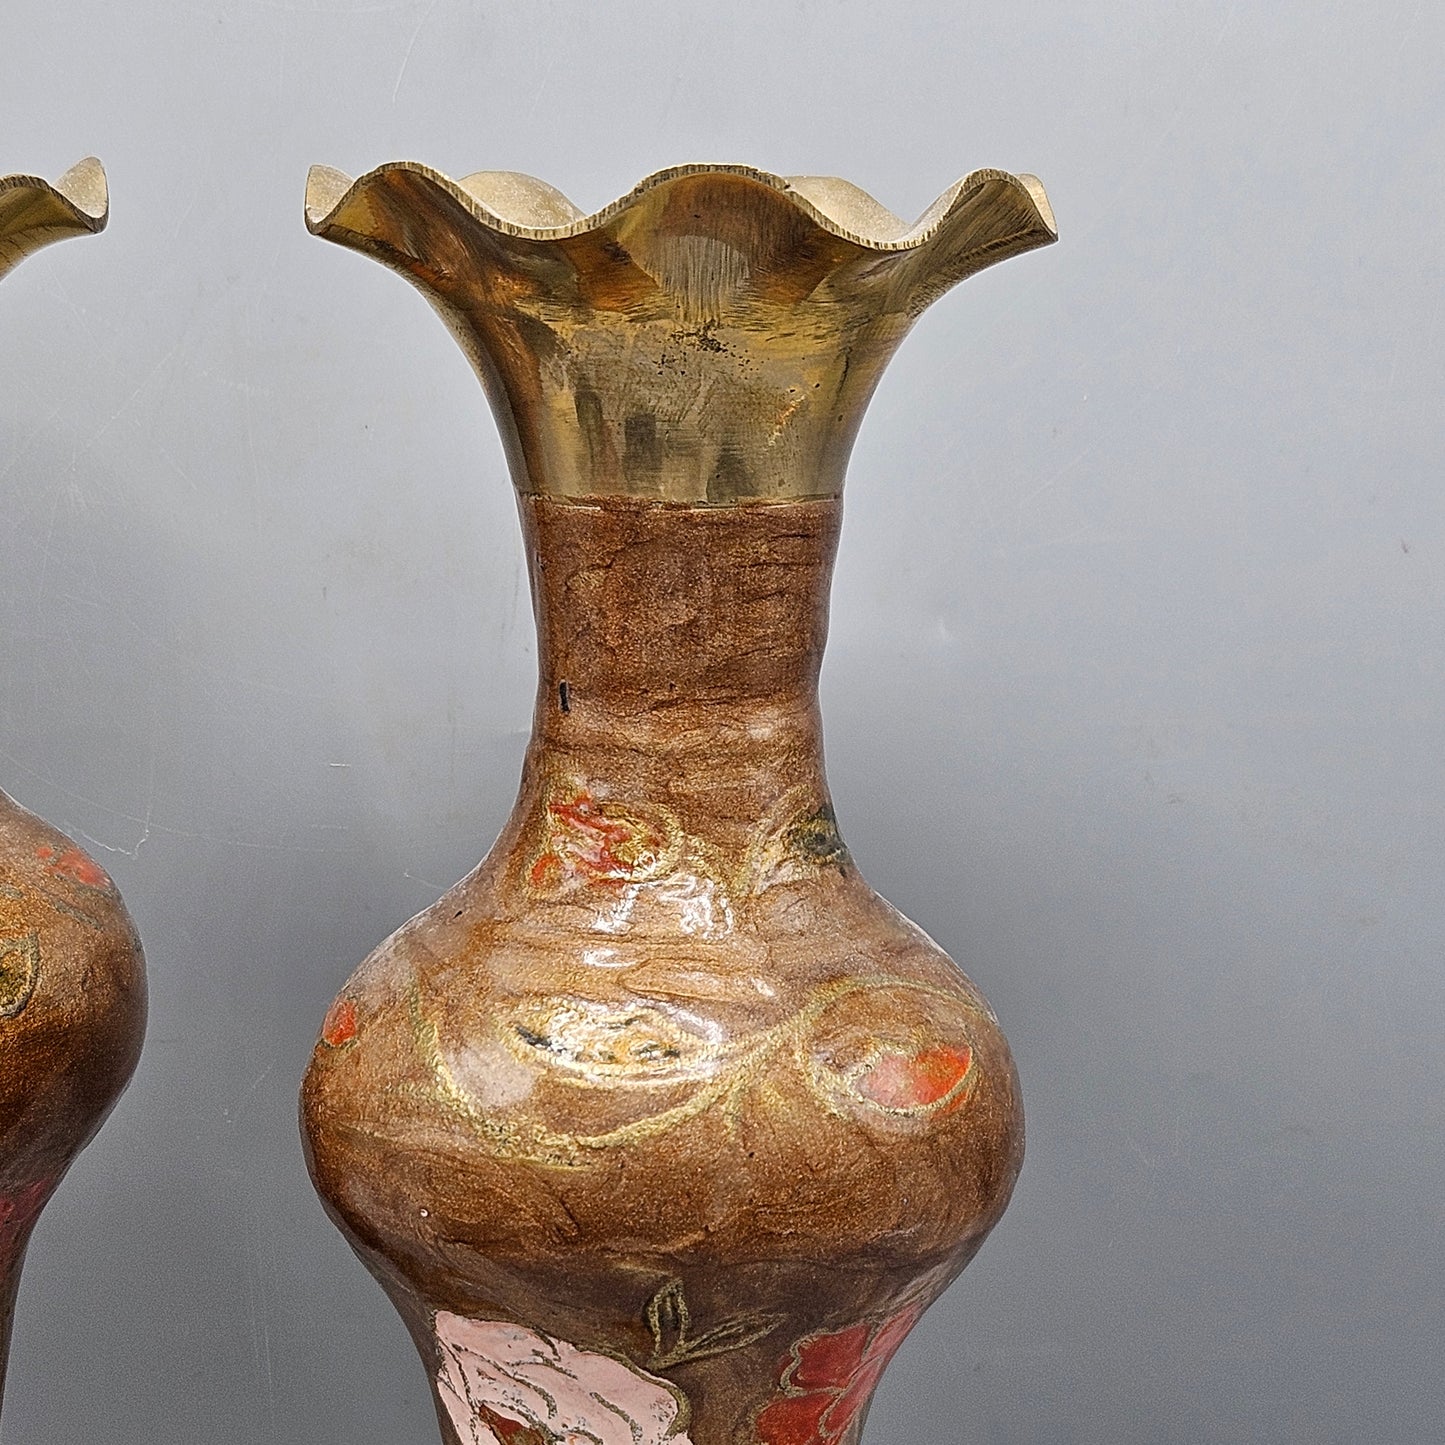 Pair of Vintage Brass Ruffled Rim Vases with Flowers